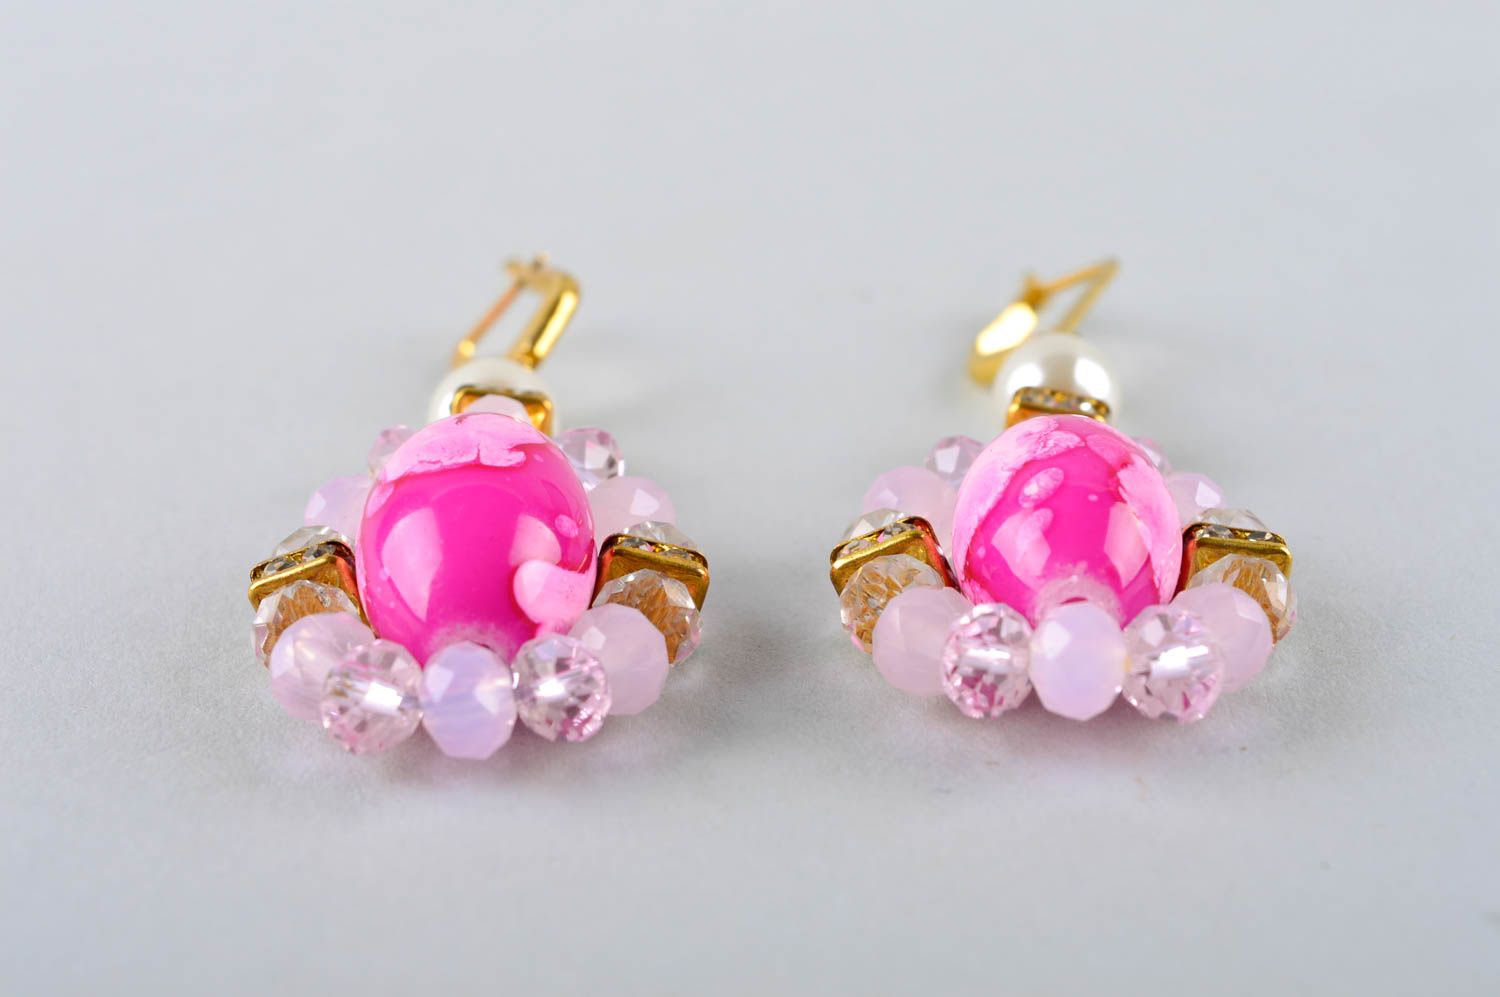 Homemade jewelry earrings for ladies cute earrings designer accessories photo 3